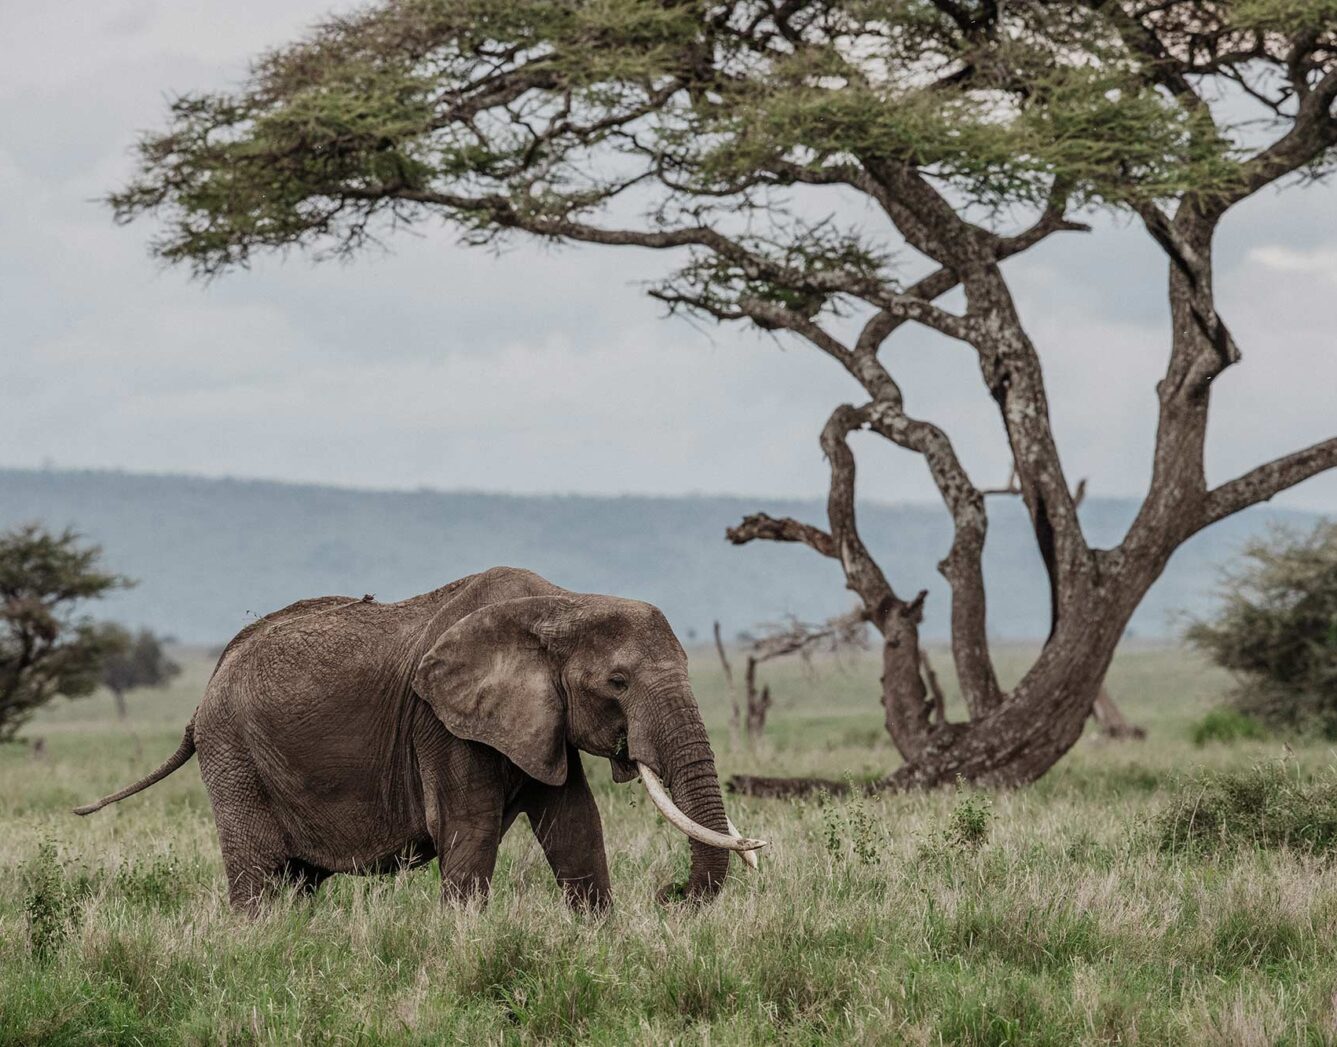 Elephant walking through the grass